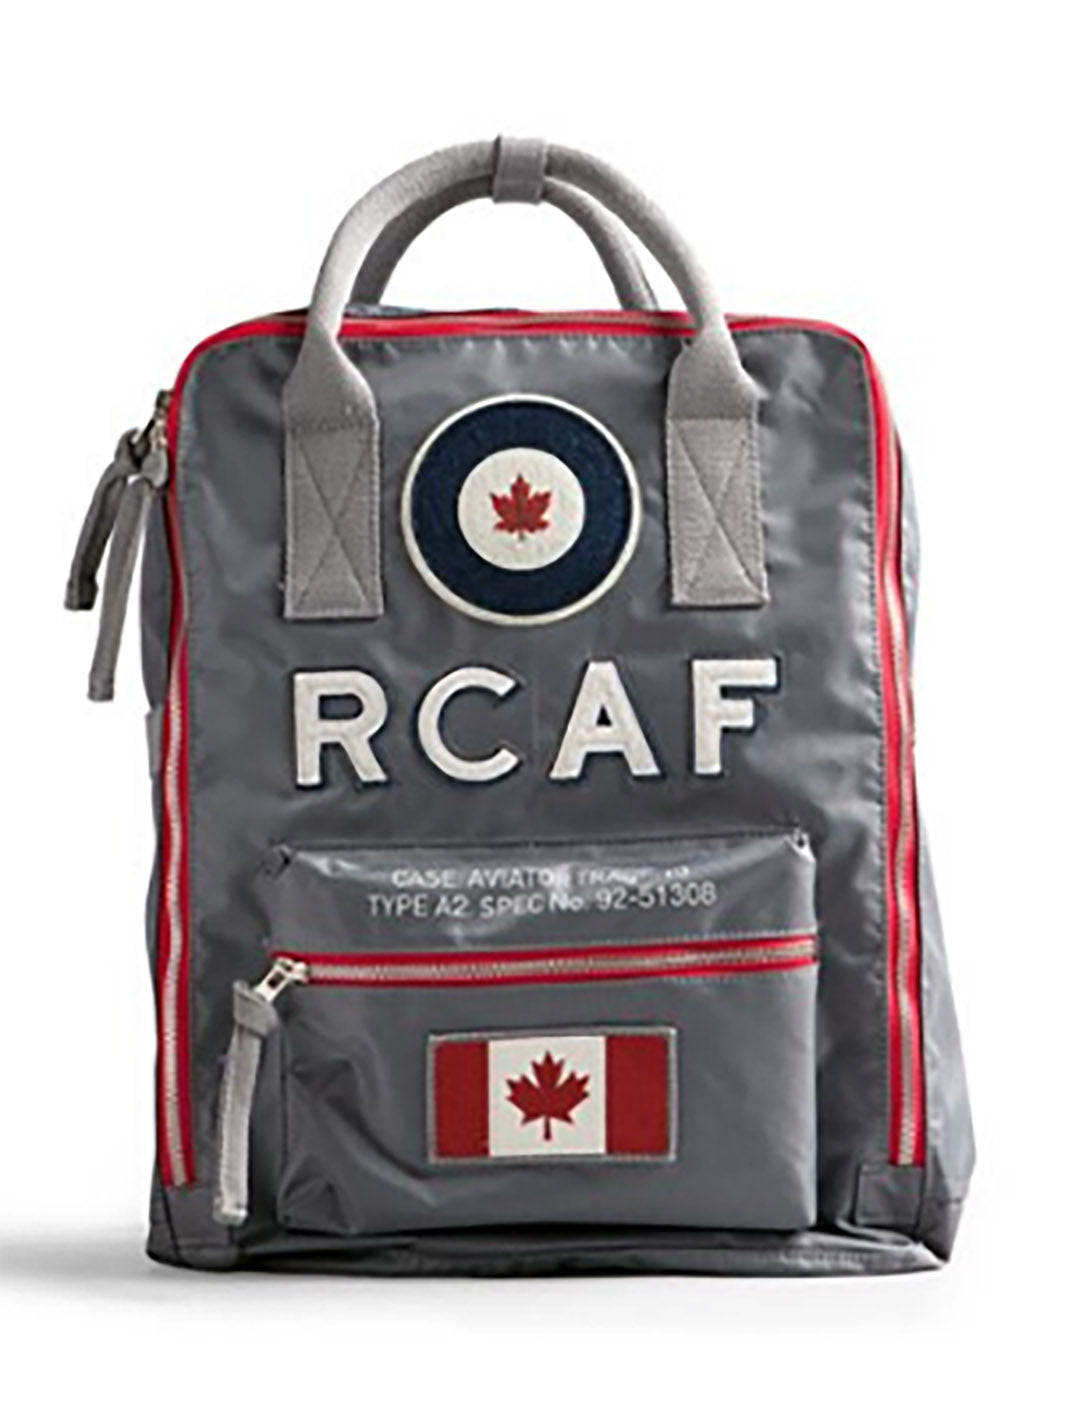 Sac a dos RCAF gris